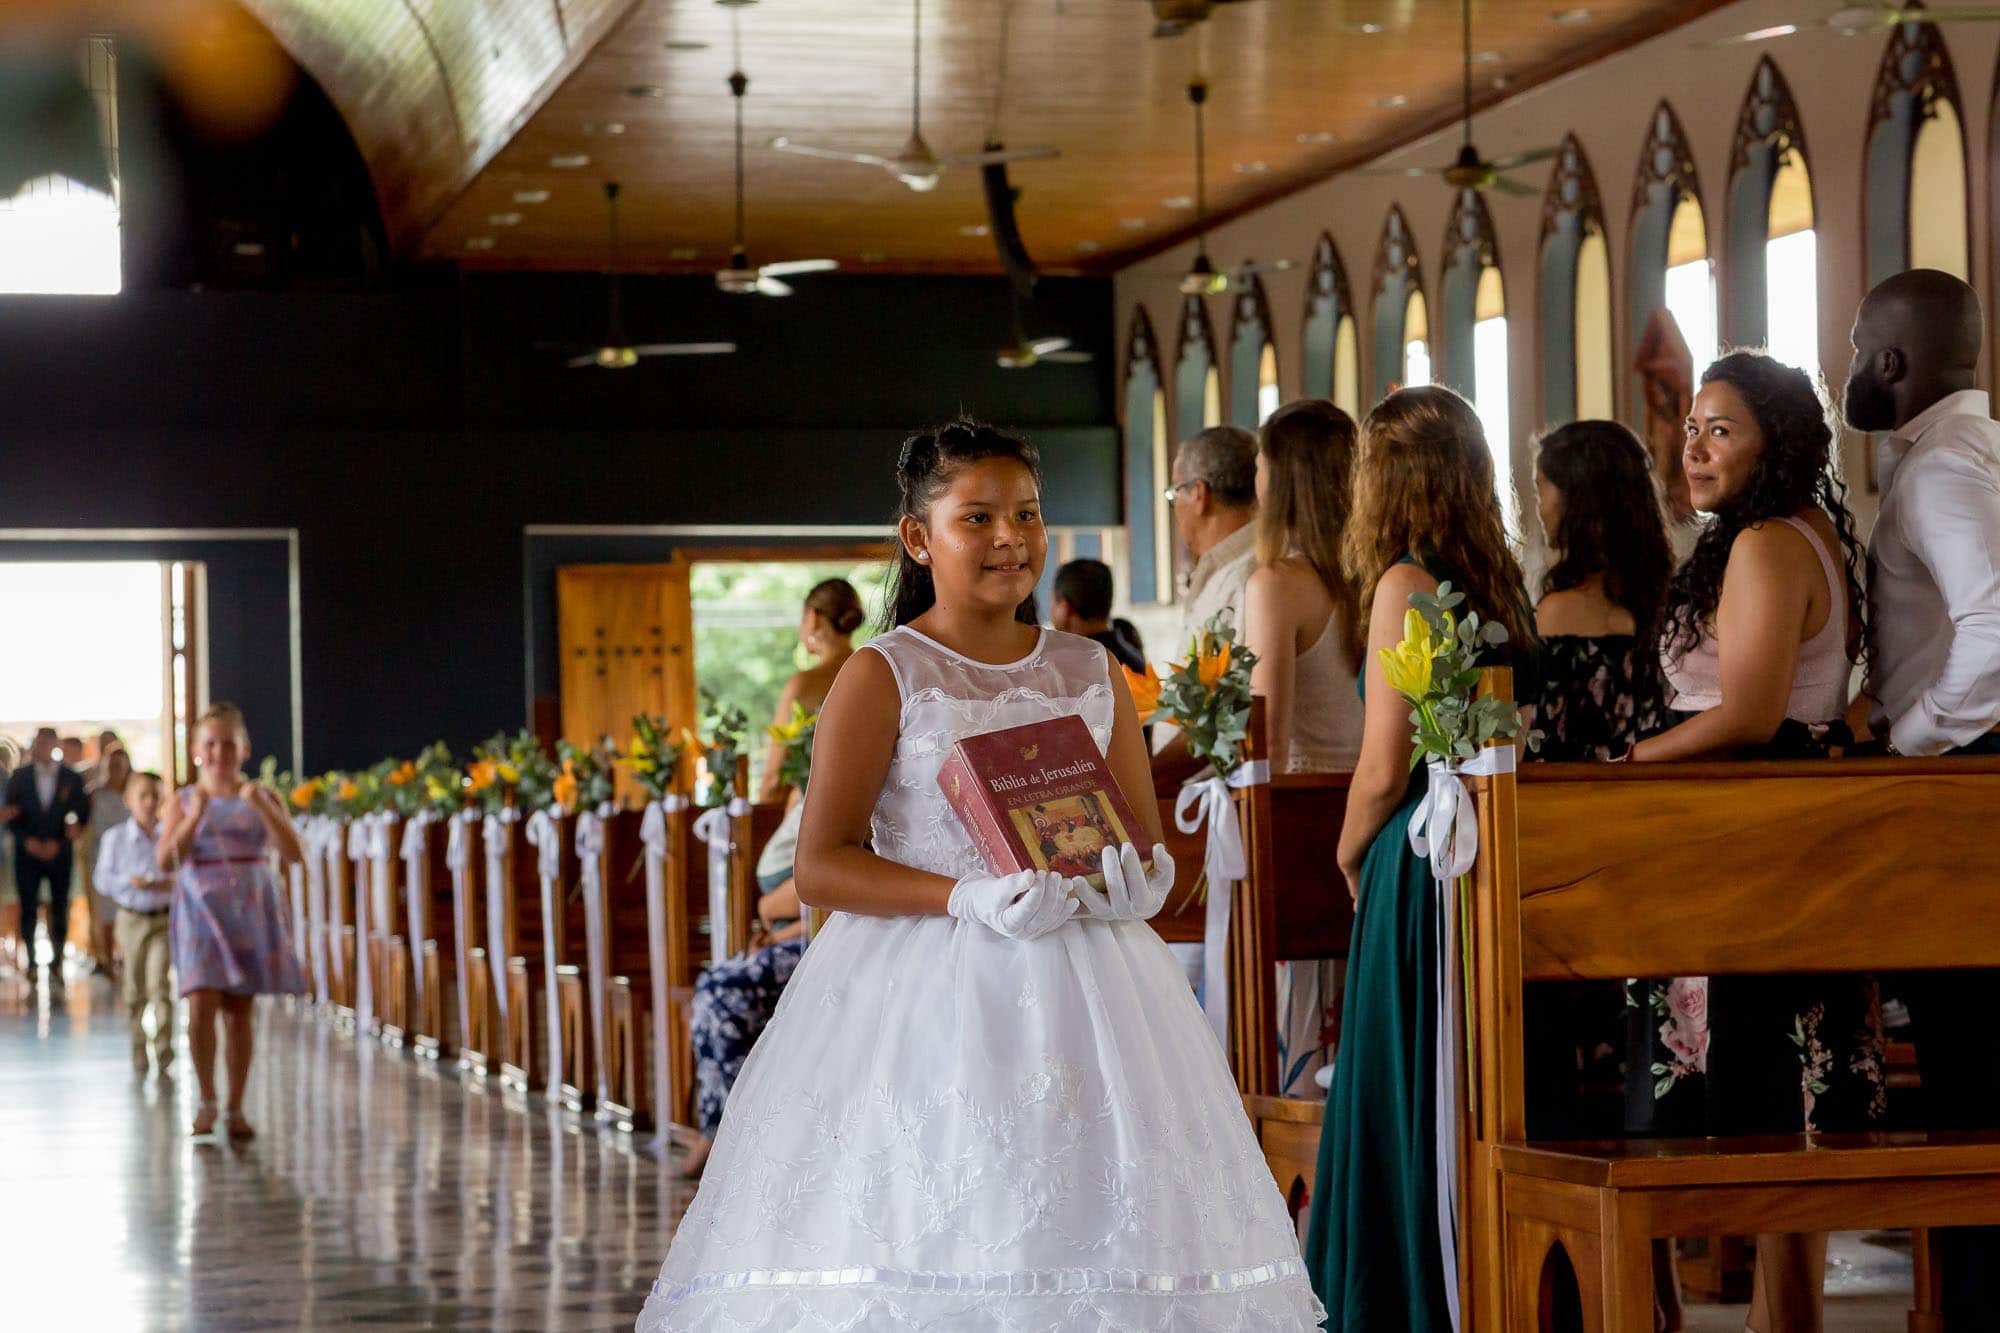 The flower girl for the church wedding